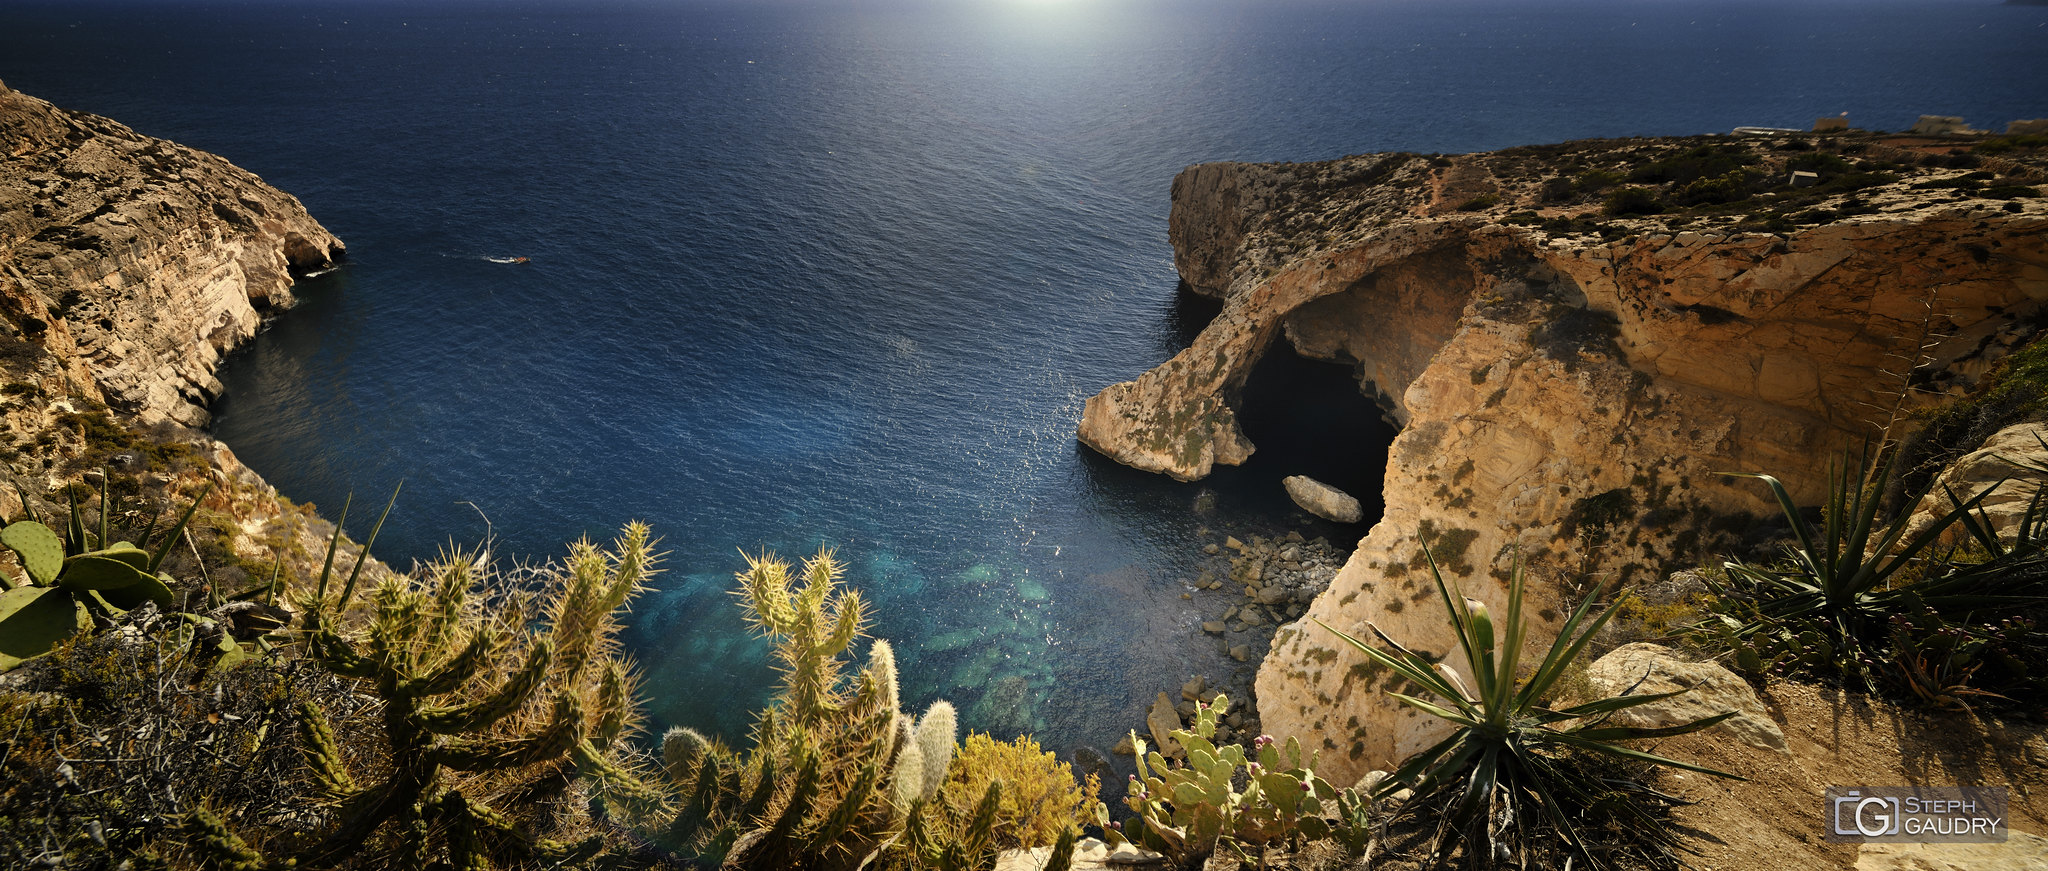 La grotte bleue à Malte [Click to start slideshow]